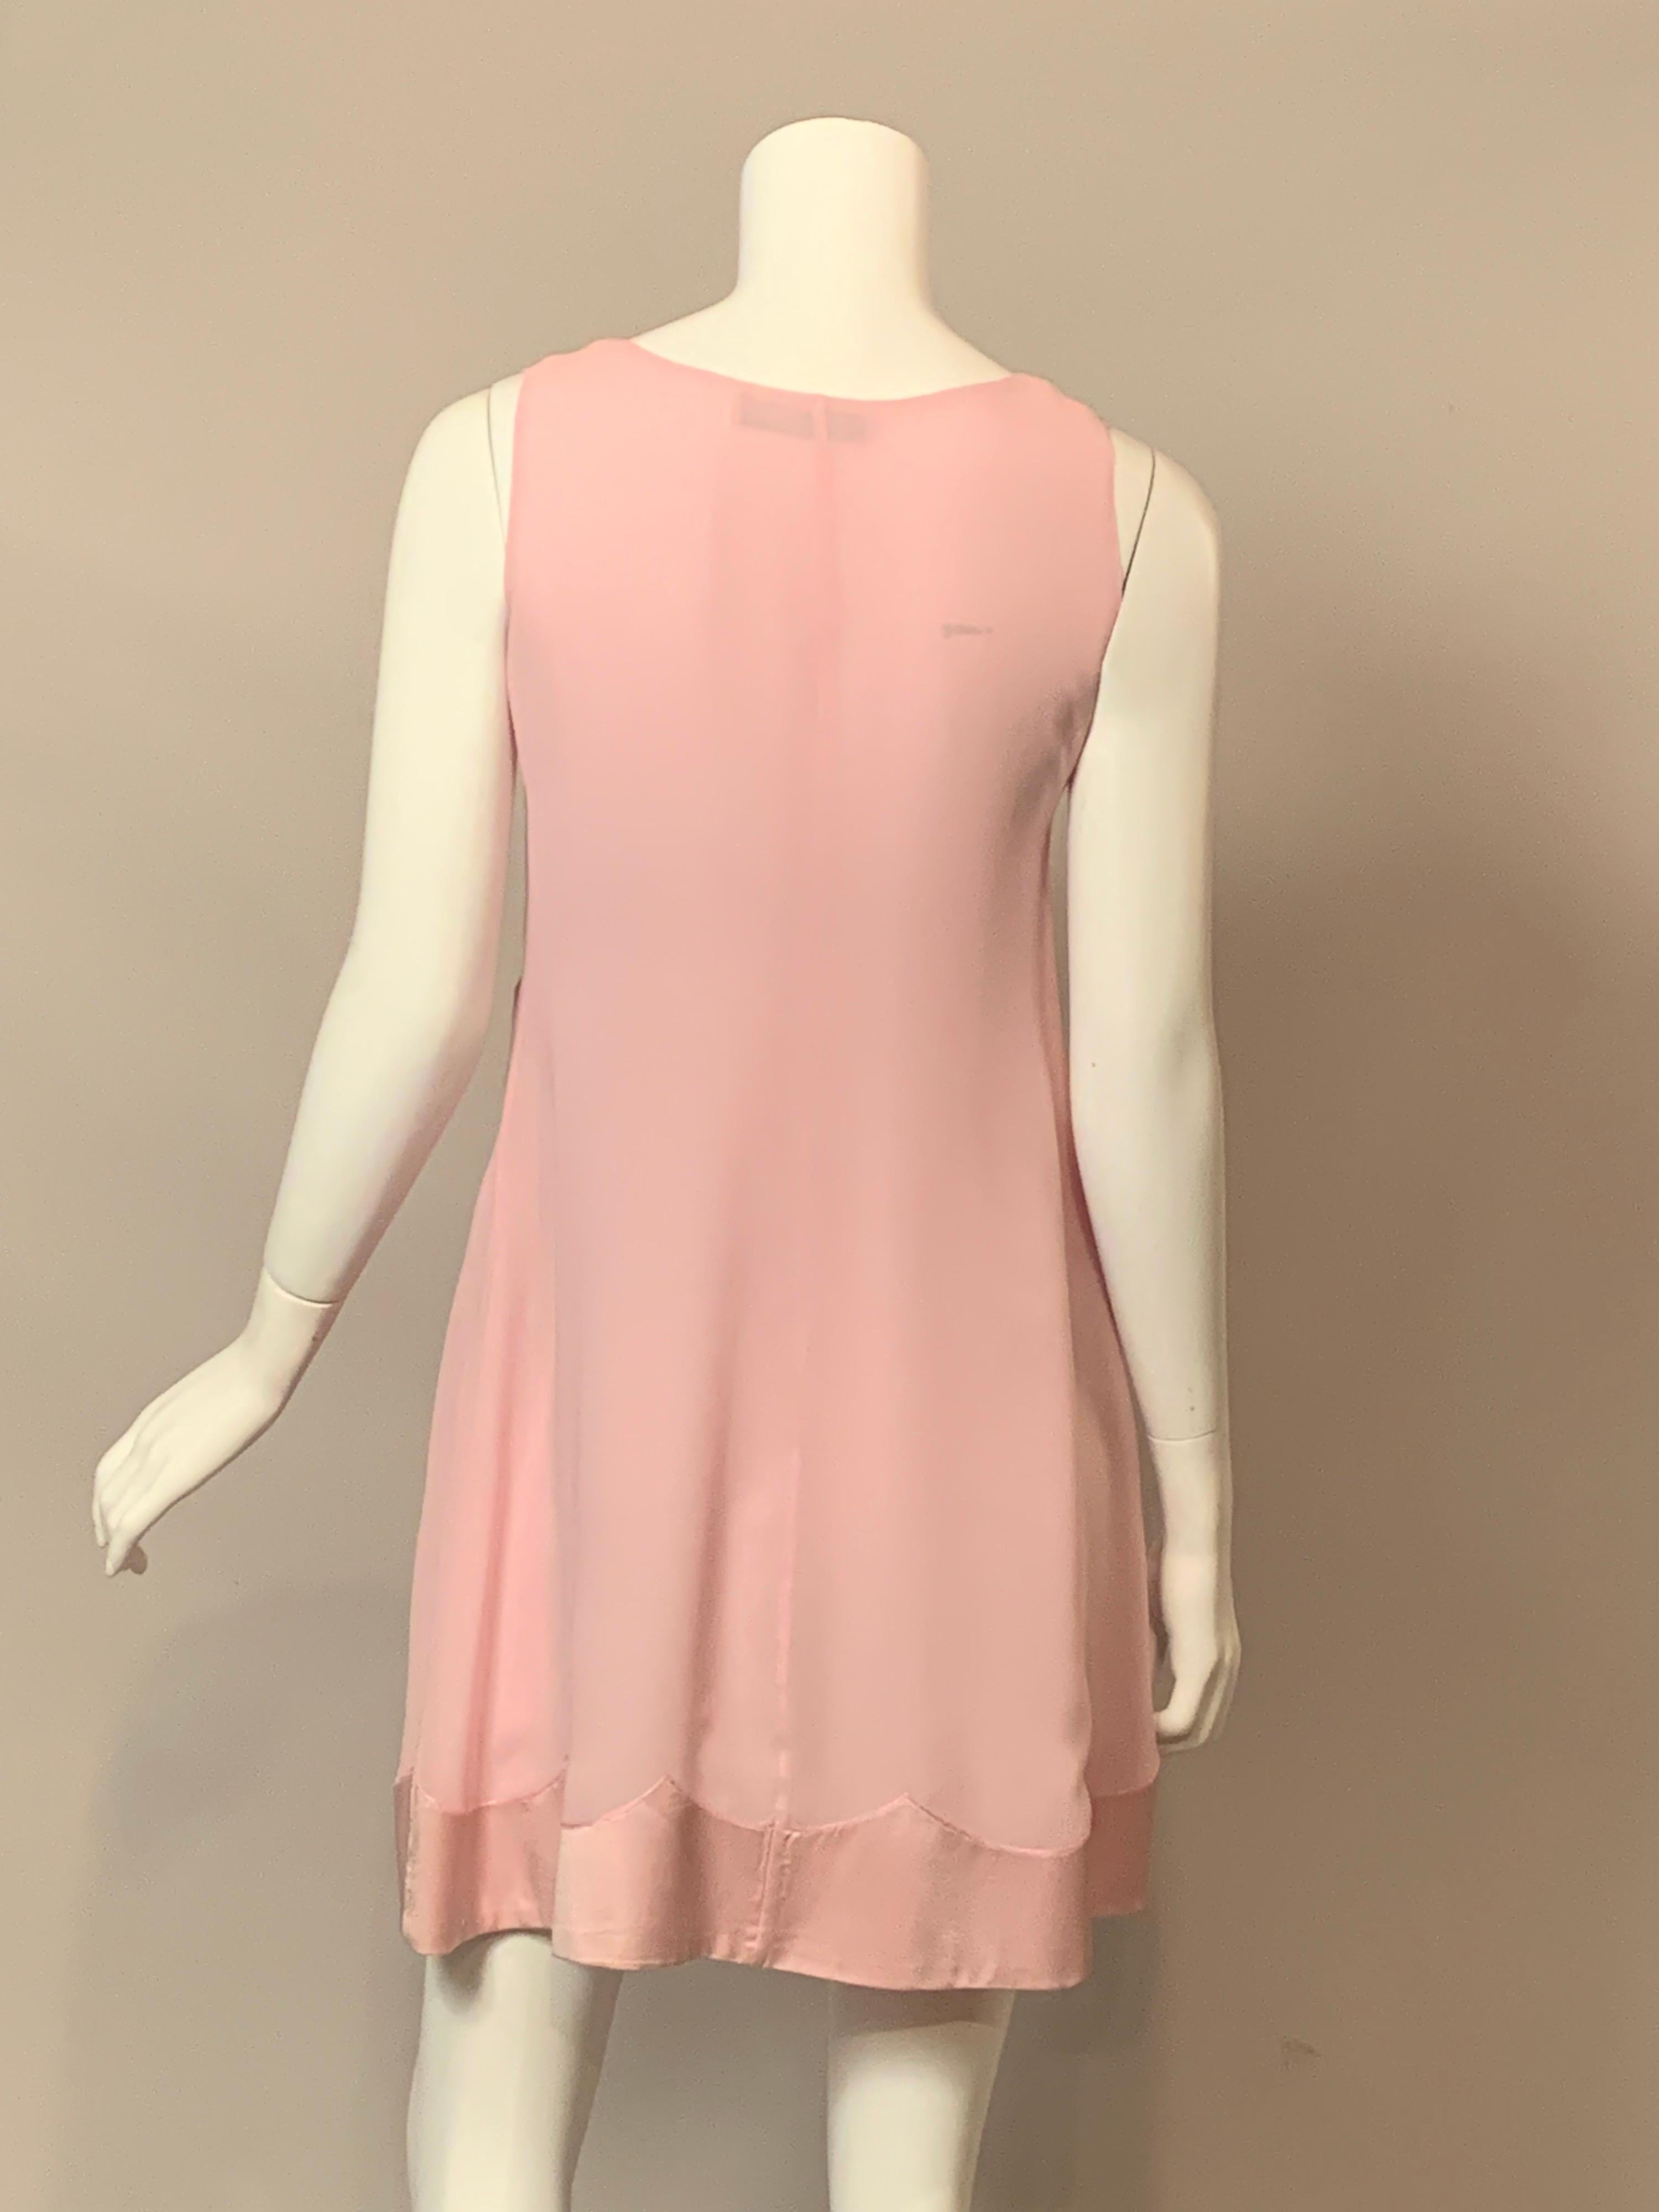 Alberta Ferretti Pink Silk Chiffon Floral Lingerie Dress Appliqued Satin Flowers For Sale 4